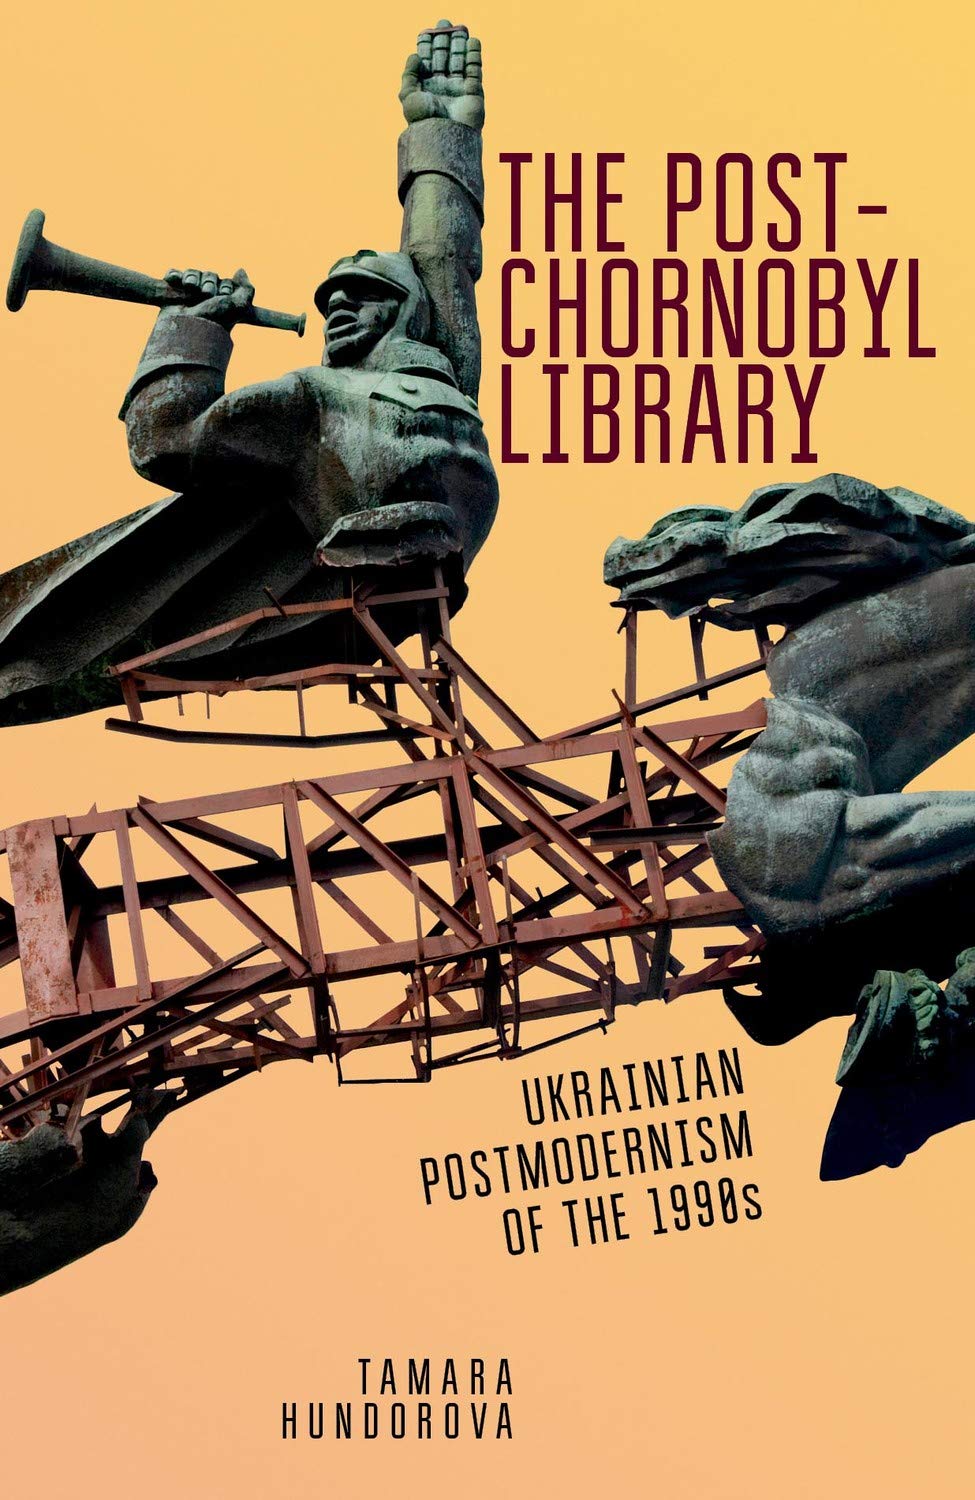 The Post-Chernobyl Library: Ukranian Postmodernism of the 1990s, by Tamara Hundorva